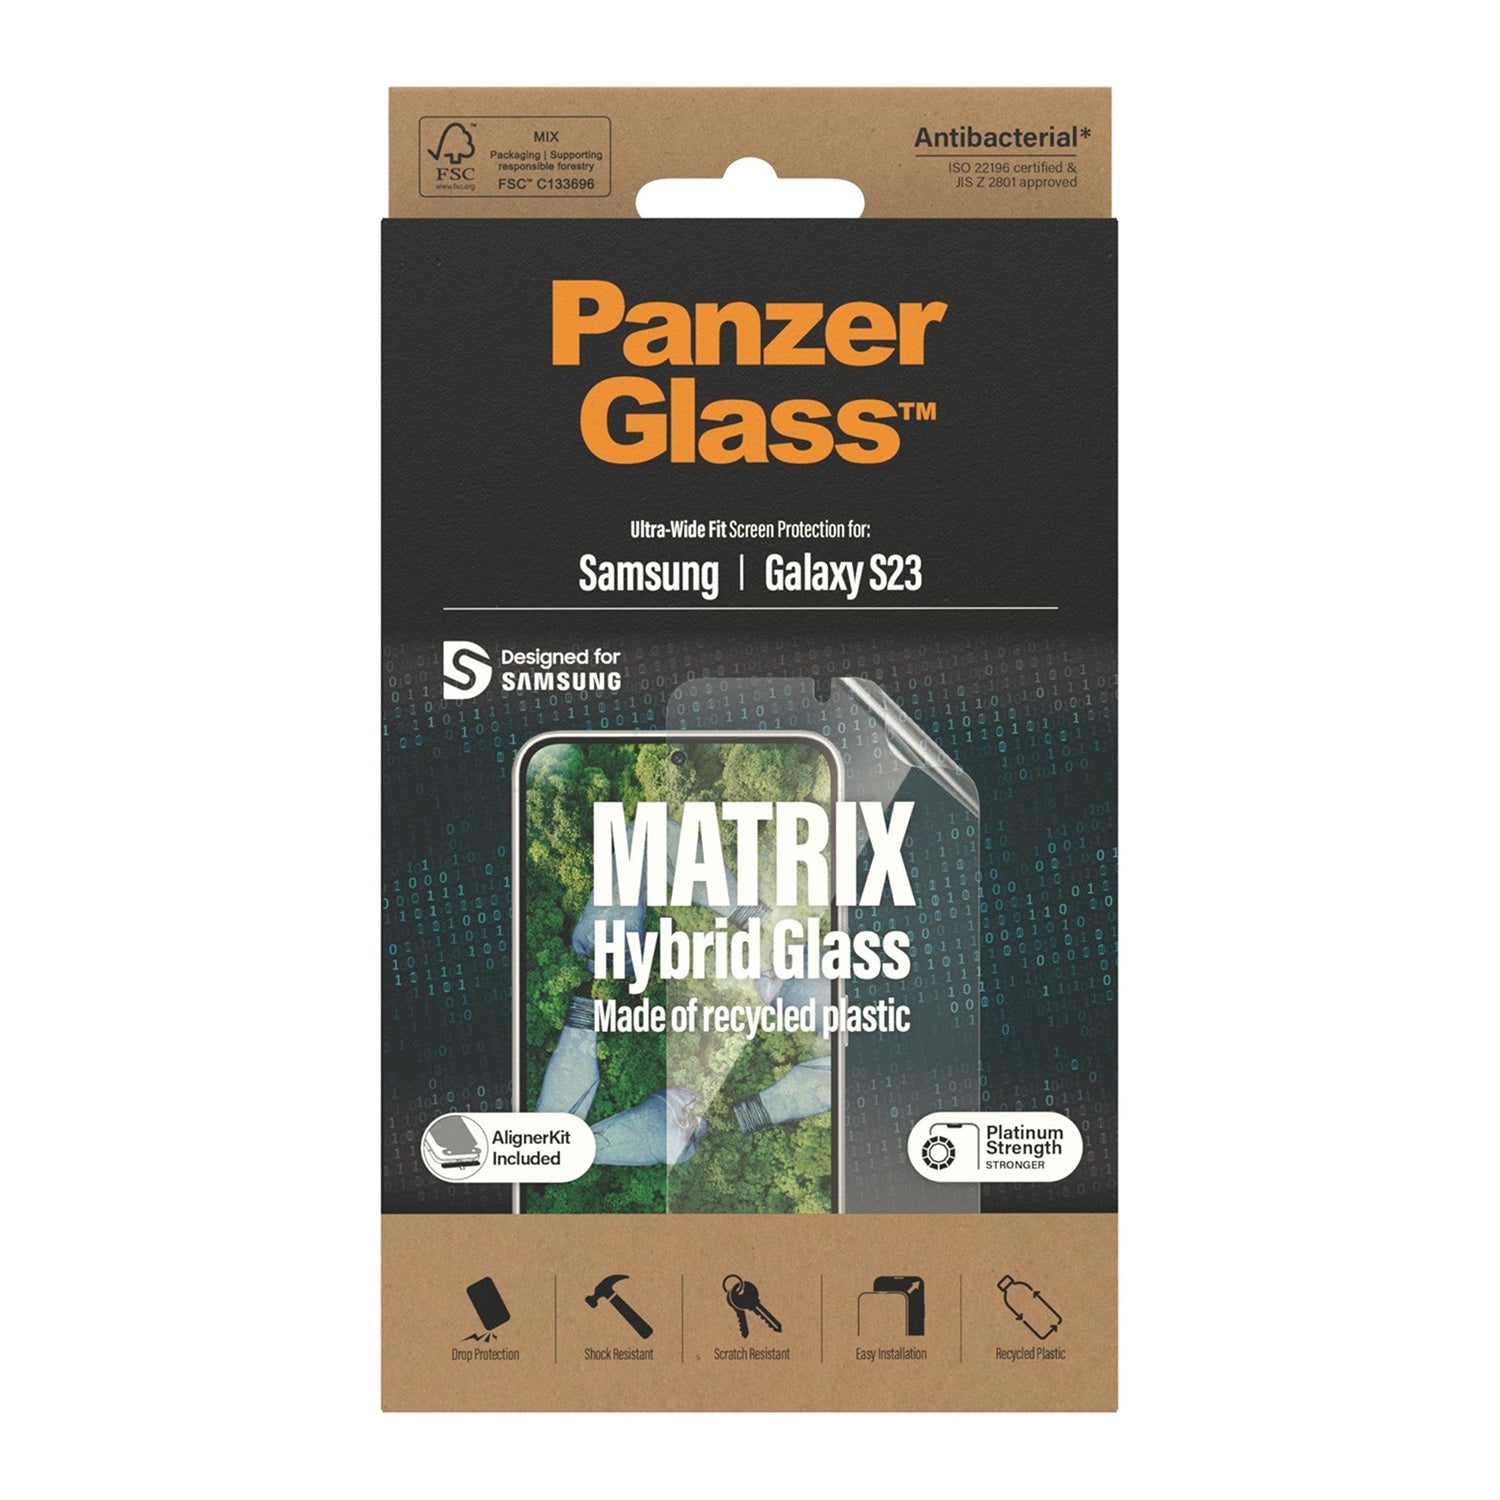 PanzerGlass Samsung Galaxy S23 Screen Protector Matrix Hybrid Glass with EasyAligner